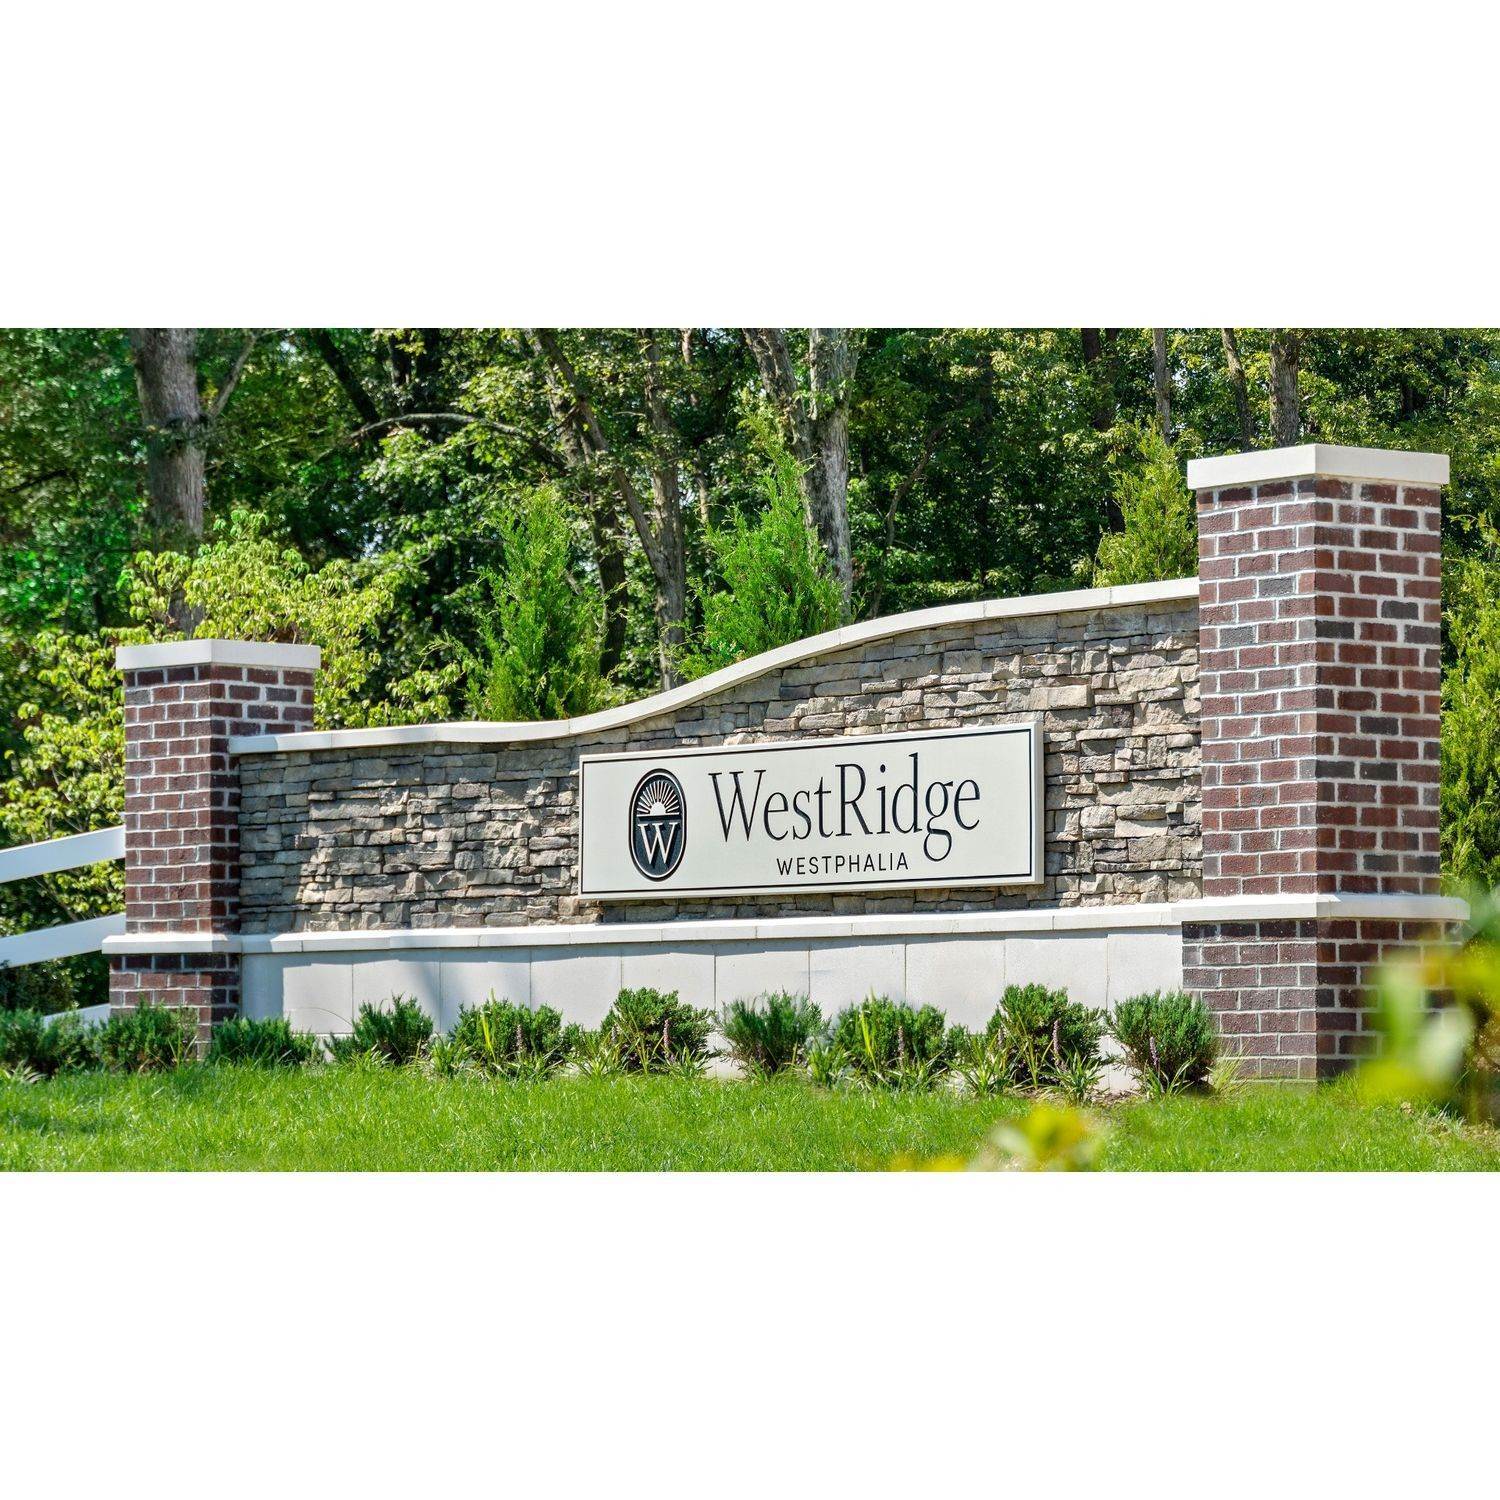 6. WestRidge at Westphalia building at 2670 Sierra Nevada Drive, Upper Marlboro, MD 20774